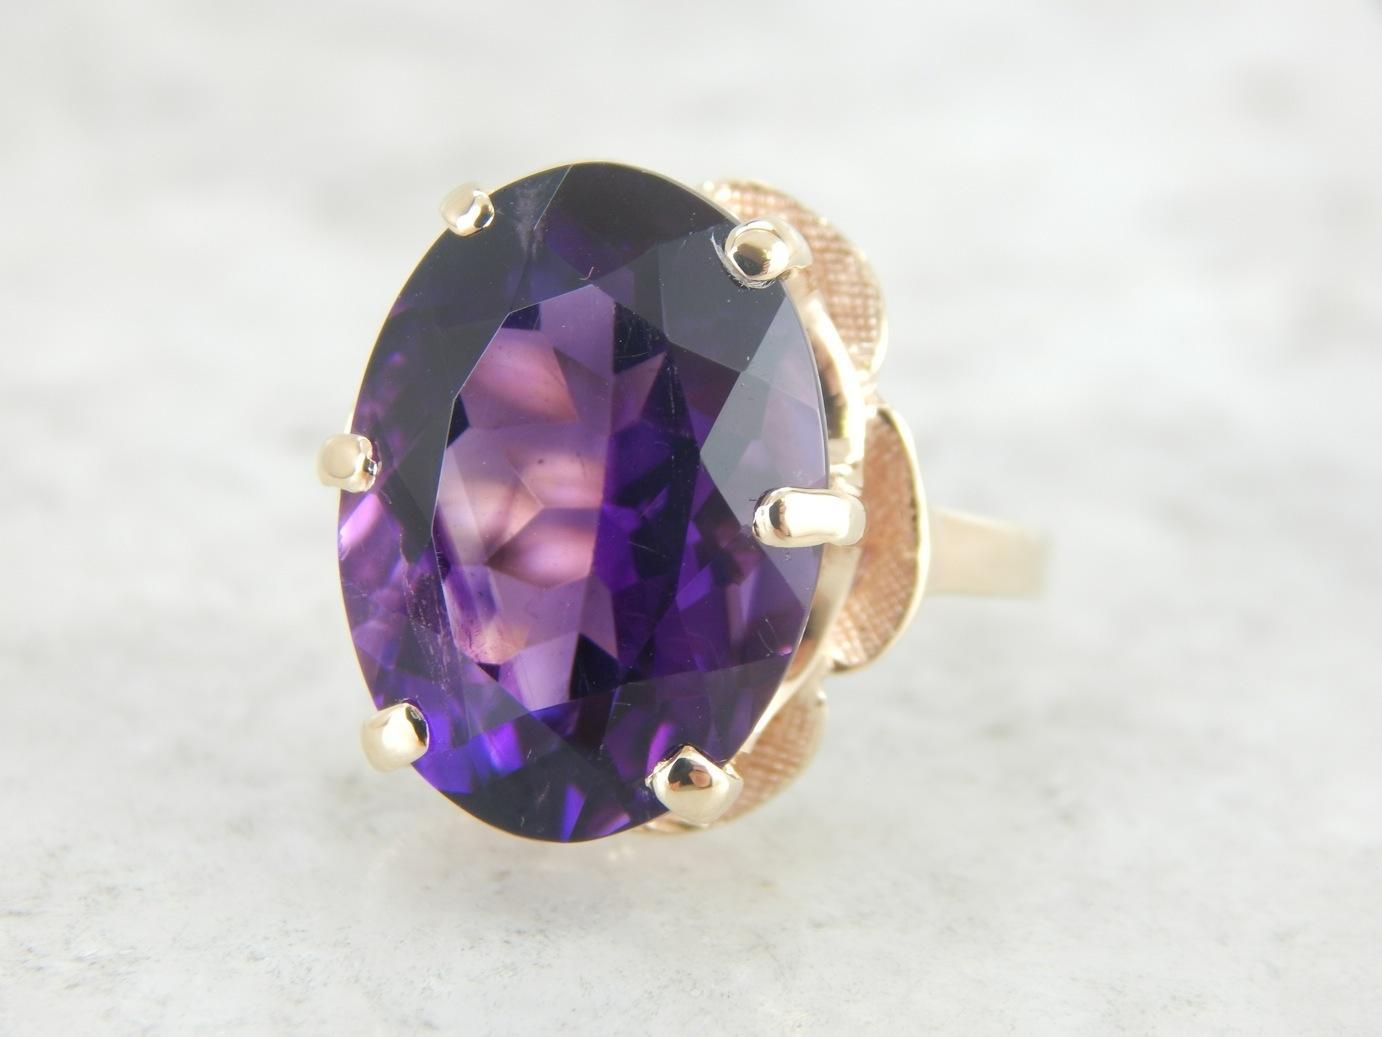 Buy 14 K White Gold Deep Purple Amethyst Diamond Ring Online in India - Etsy